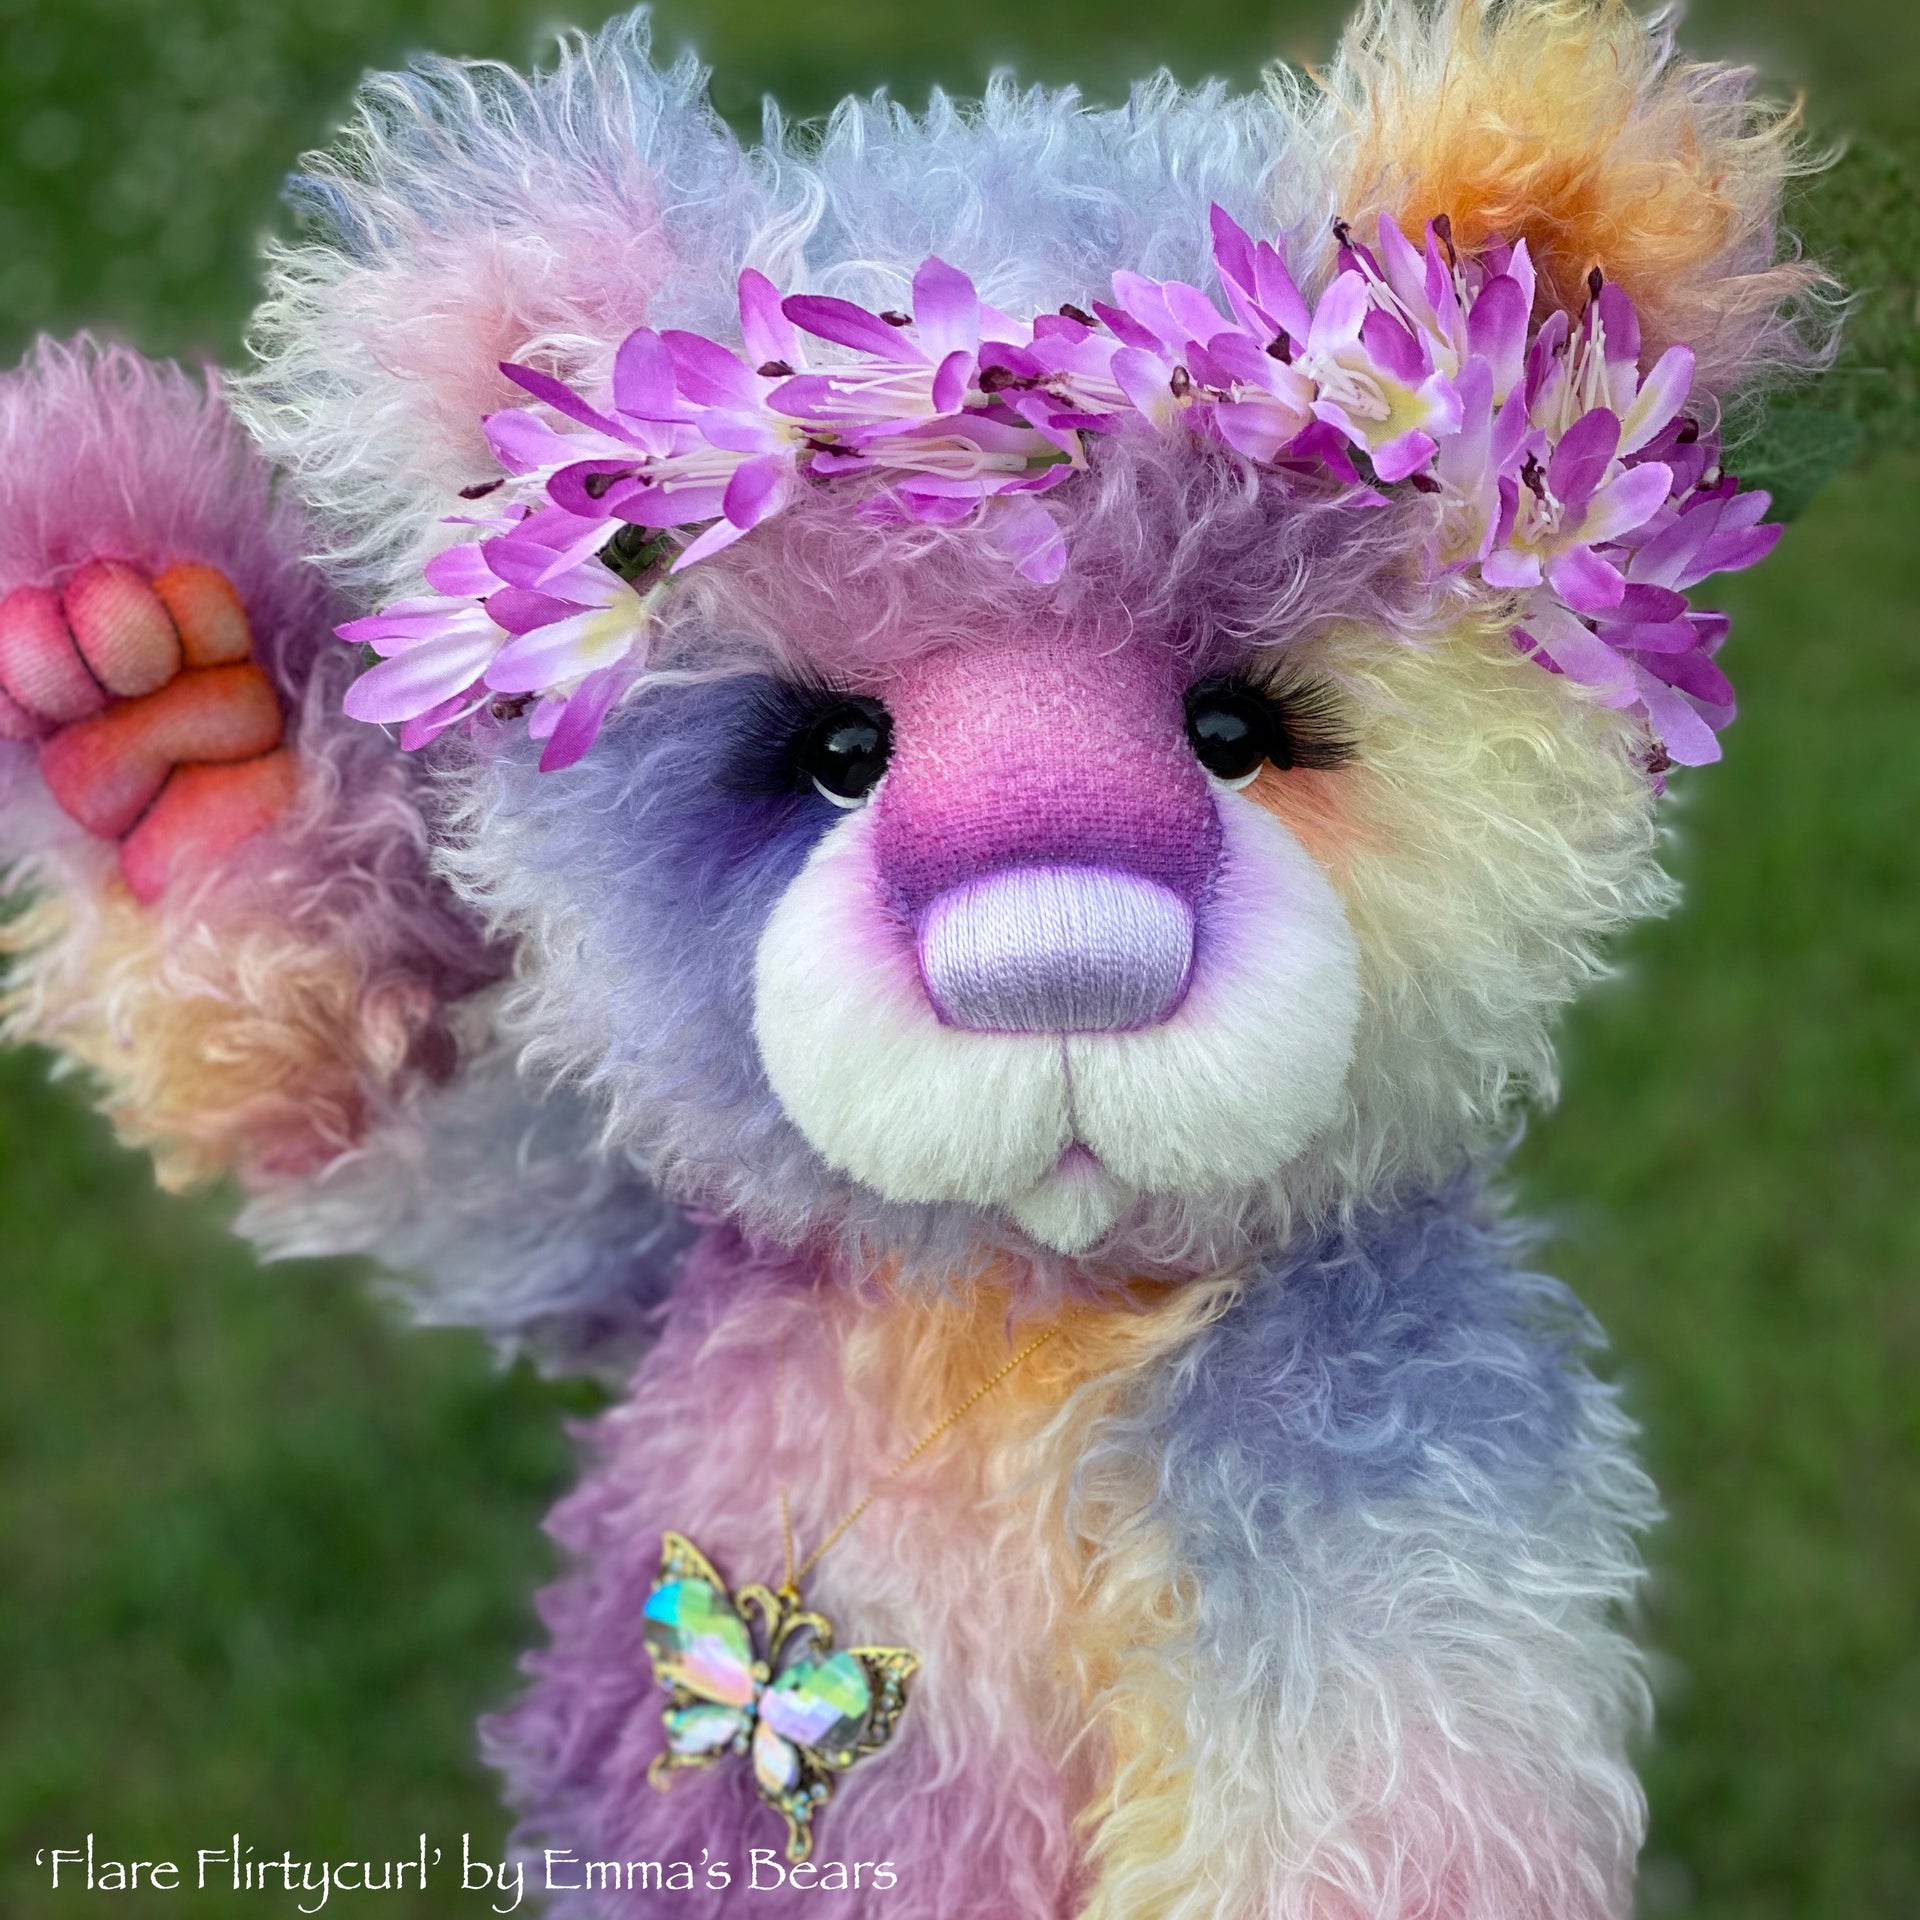 Flare Flirtycurl - 23IN hand dyed rainbow mohair bear by Emmas Bears - OOAK